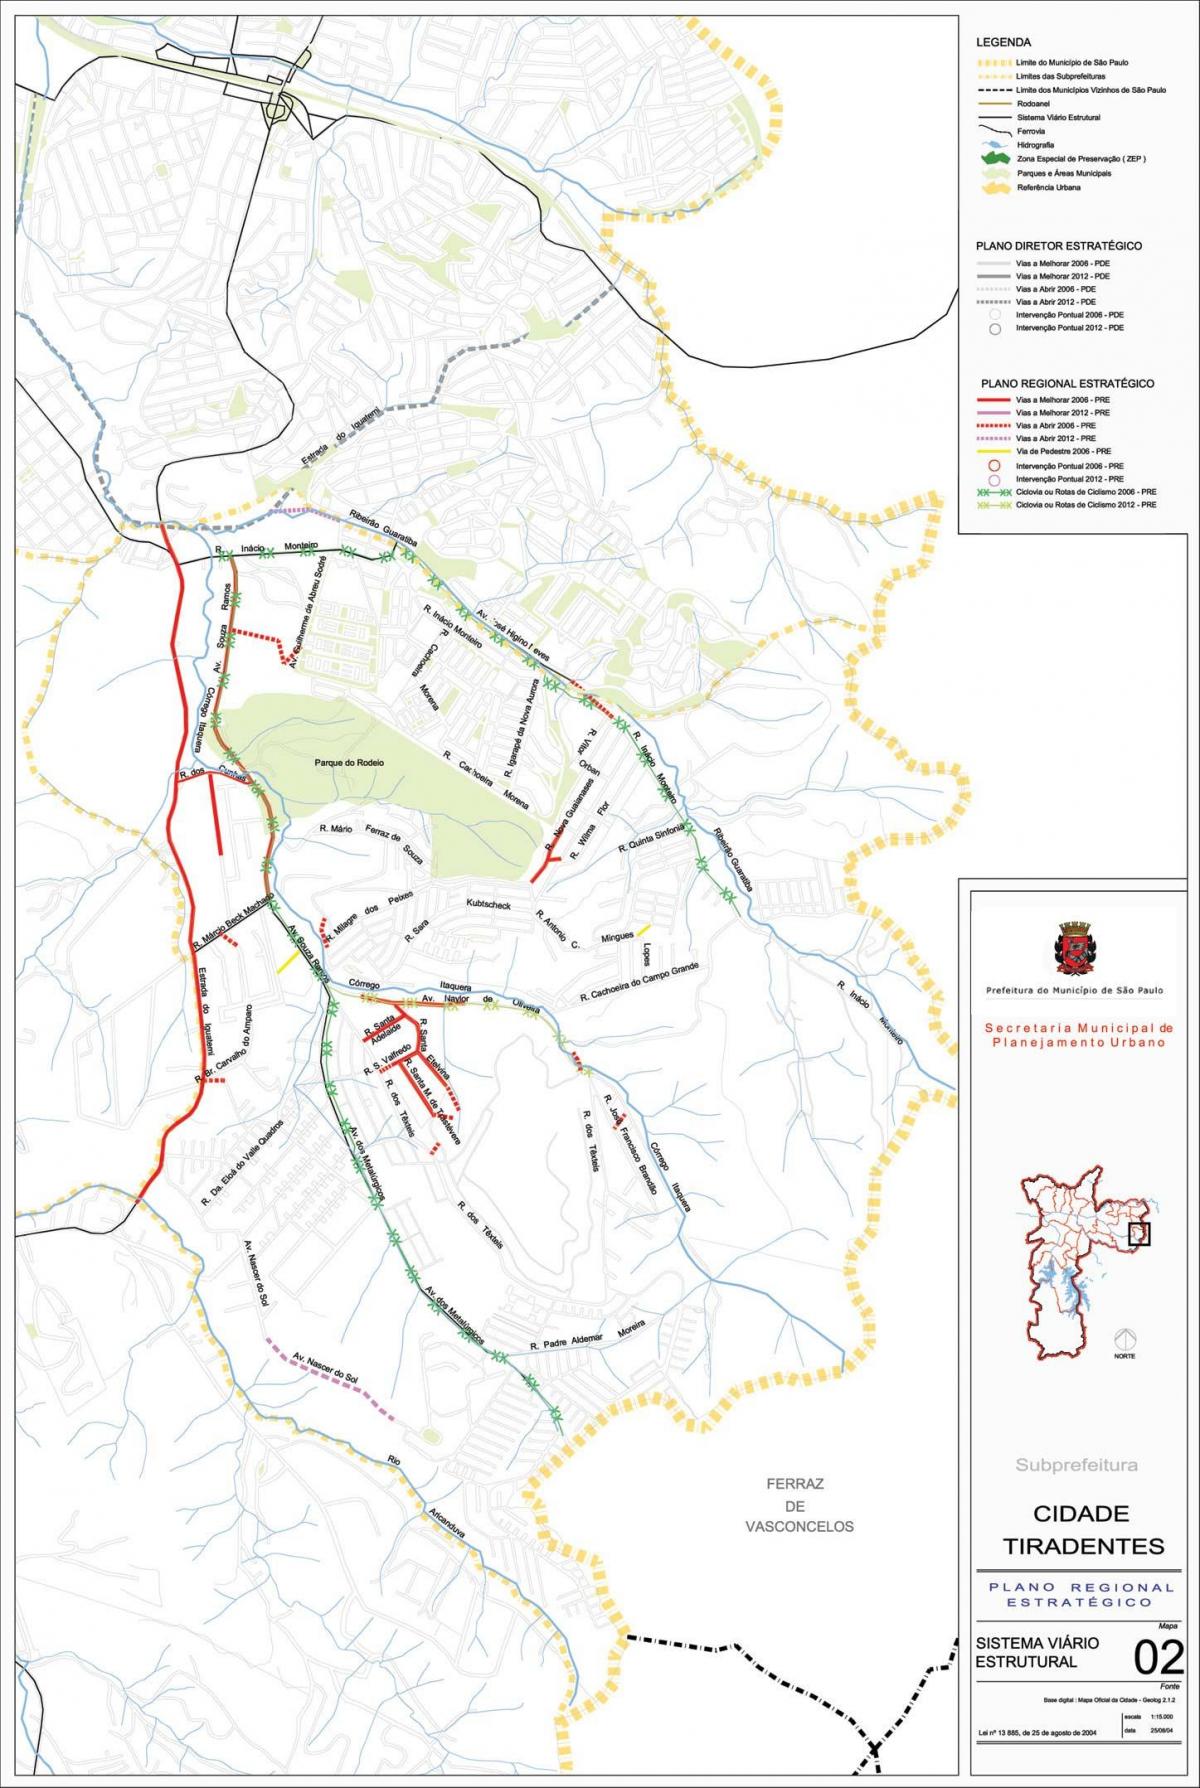 Քարտեզ Сидаде Тирадентесе Սան - ճանապարհների